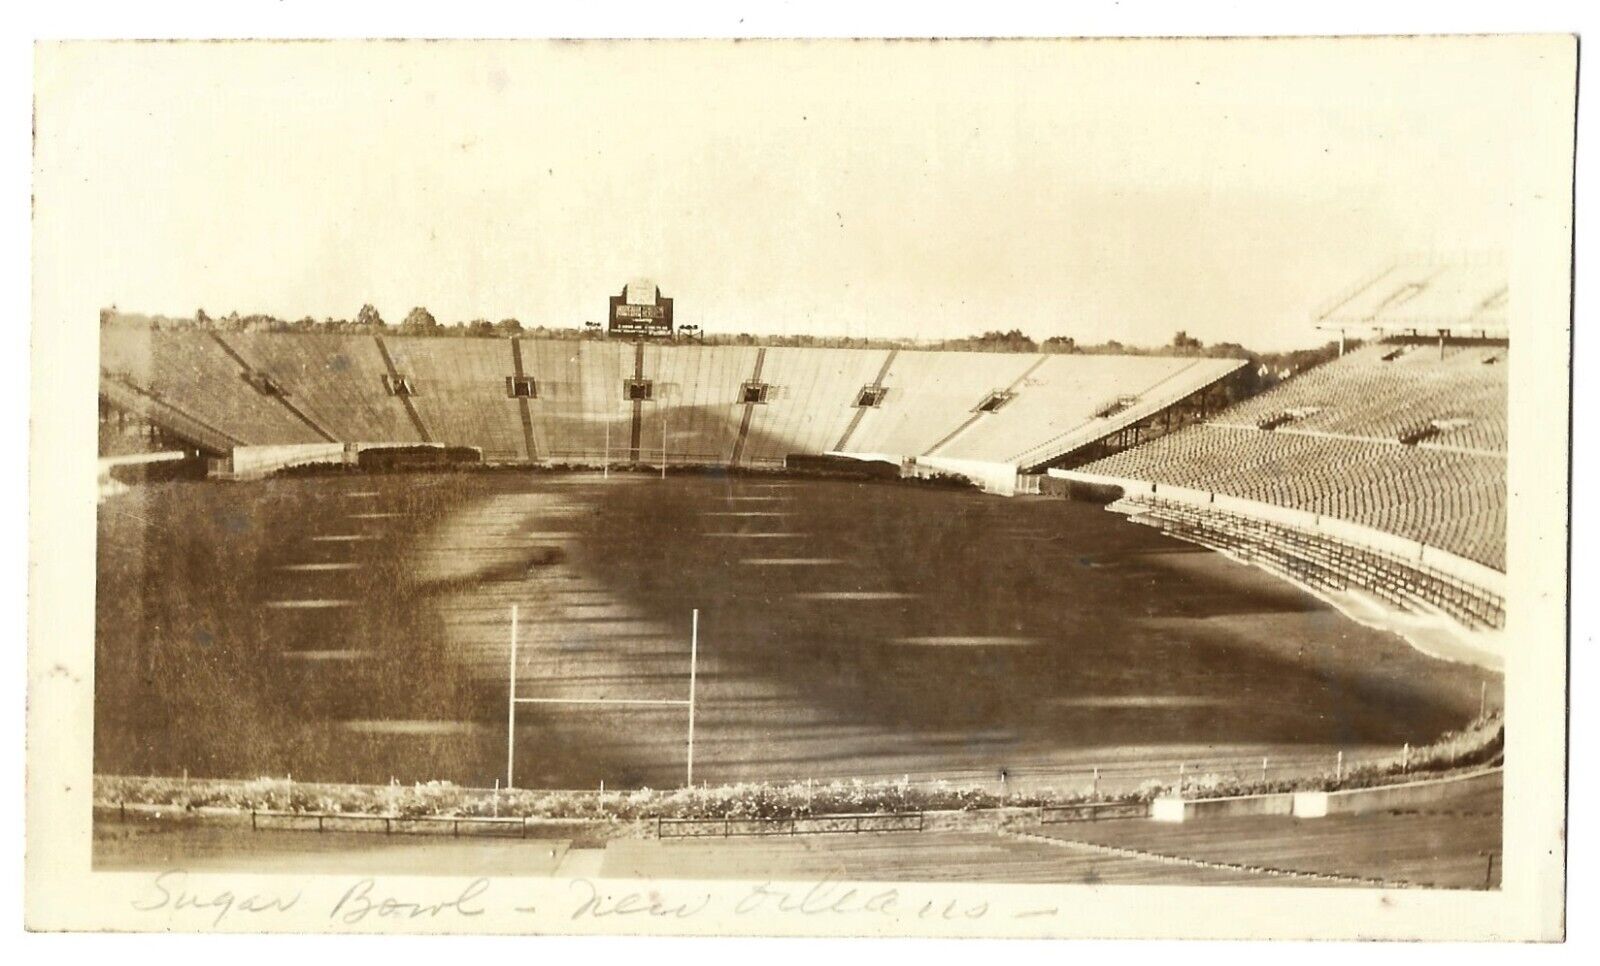 Rare Vintage Old 1920s Photo of The Sugar Bowl Football Stadium New Orleans LA